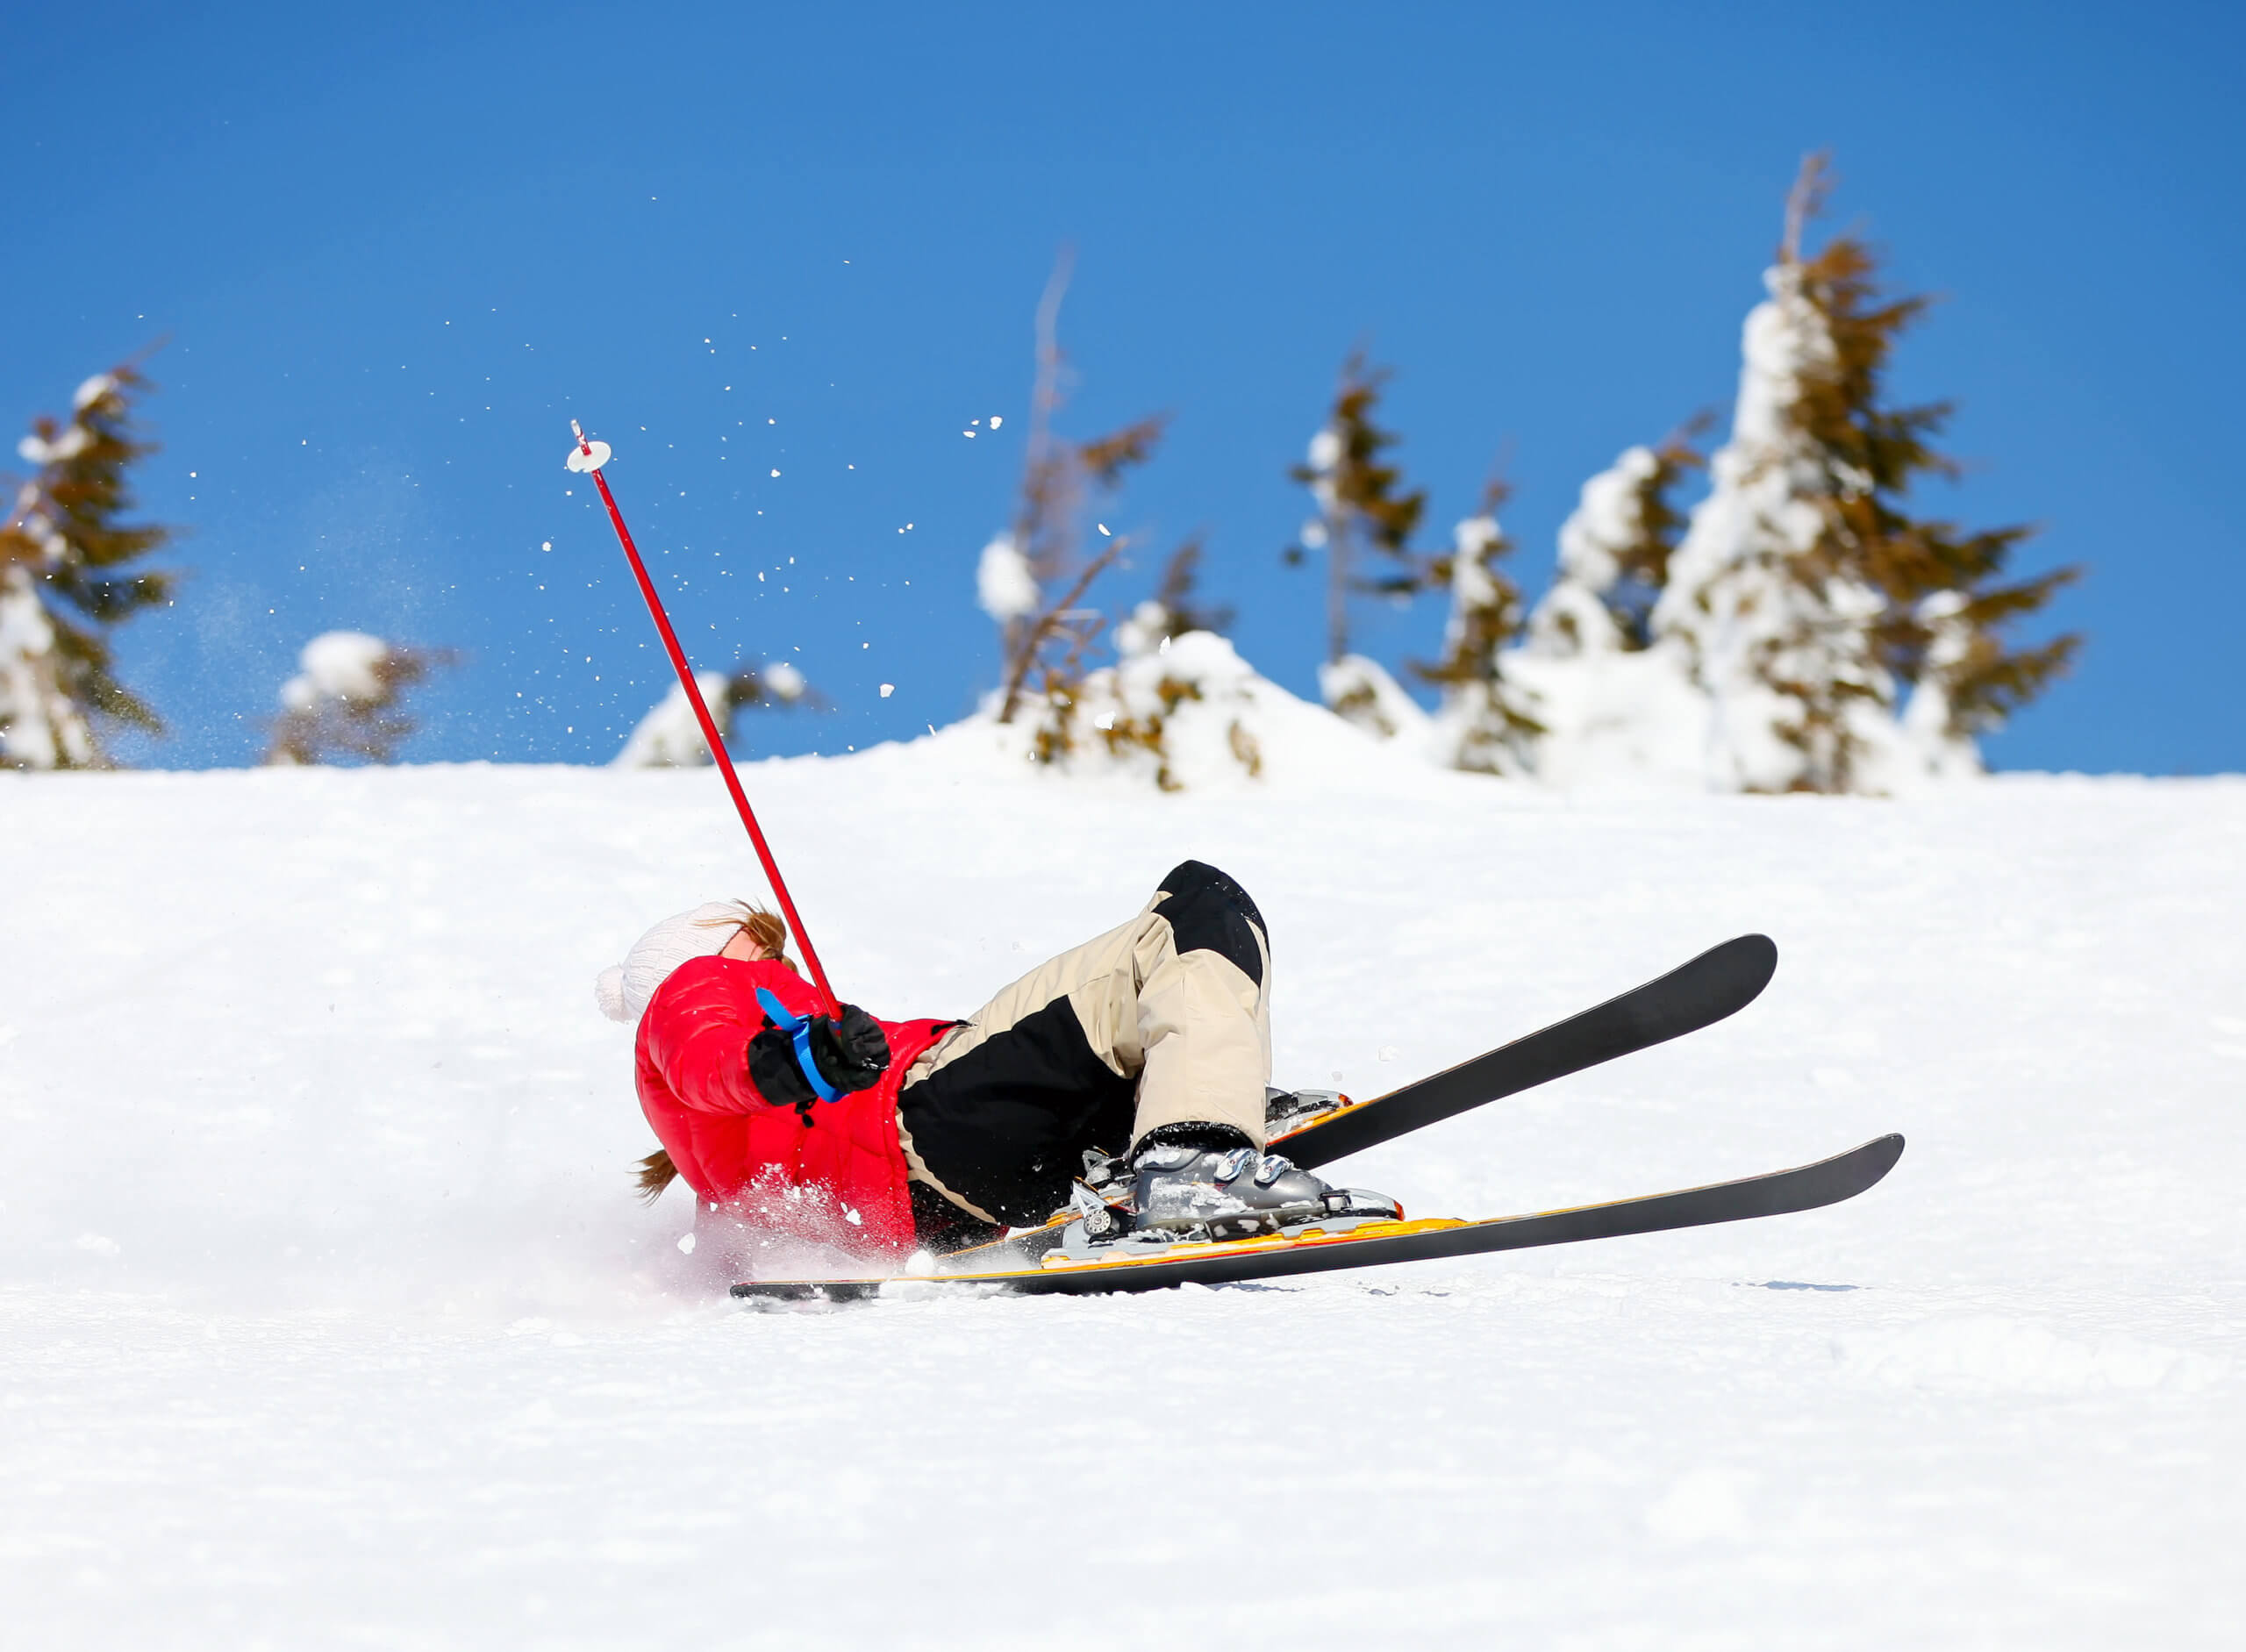 Skier in red jacket falls as he descends a ski slope.